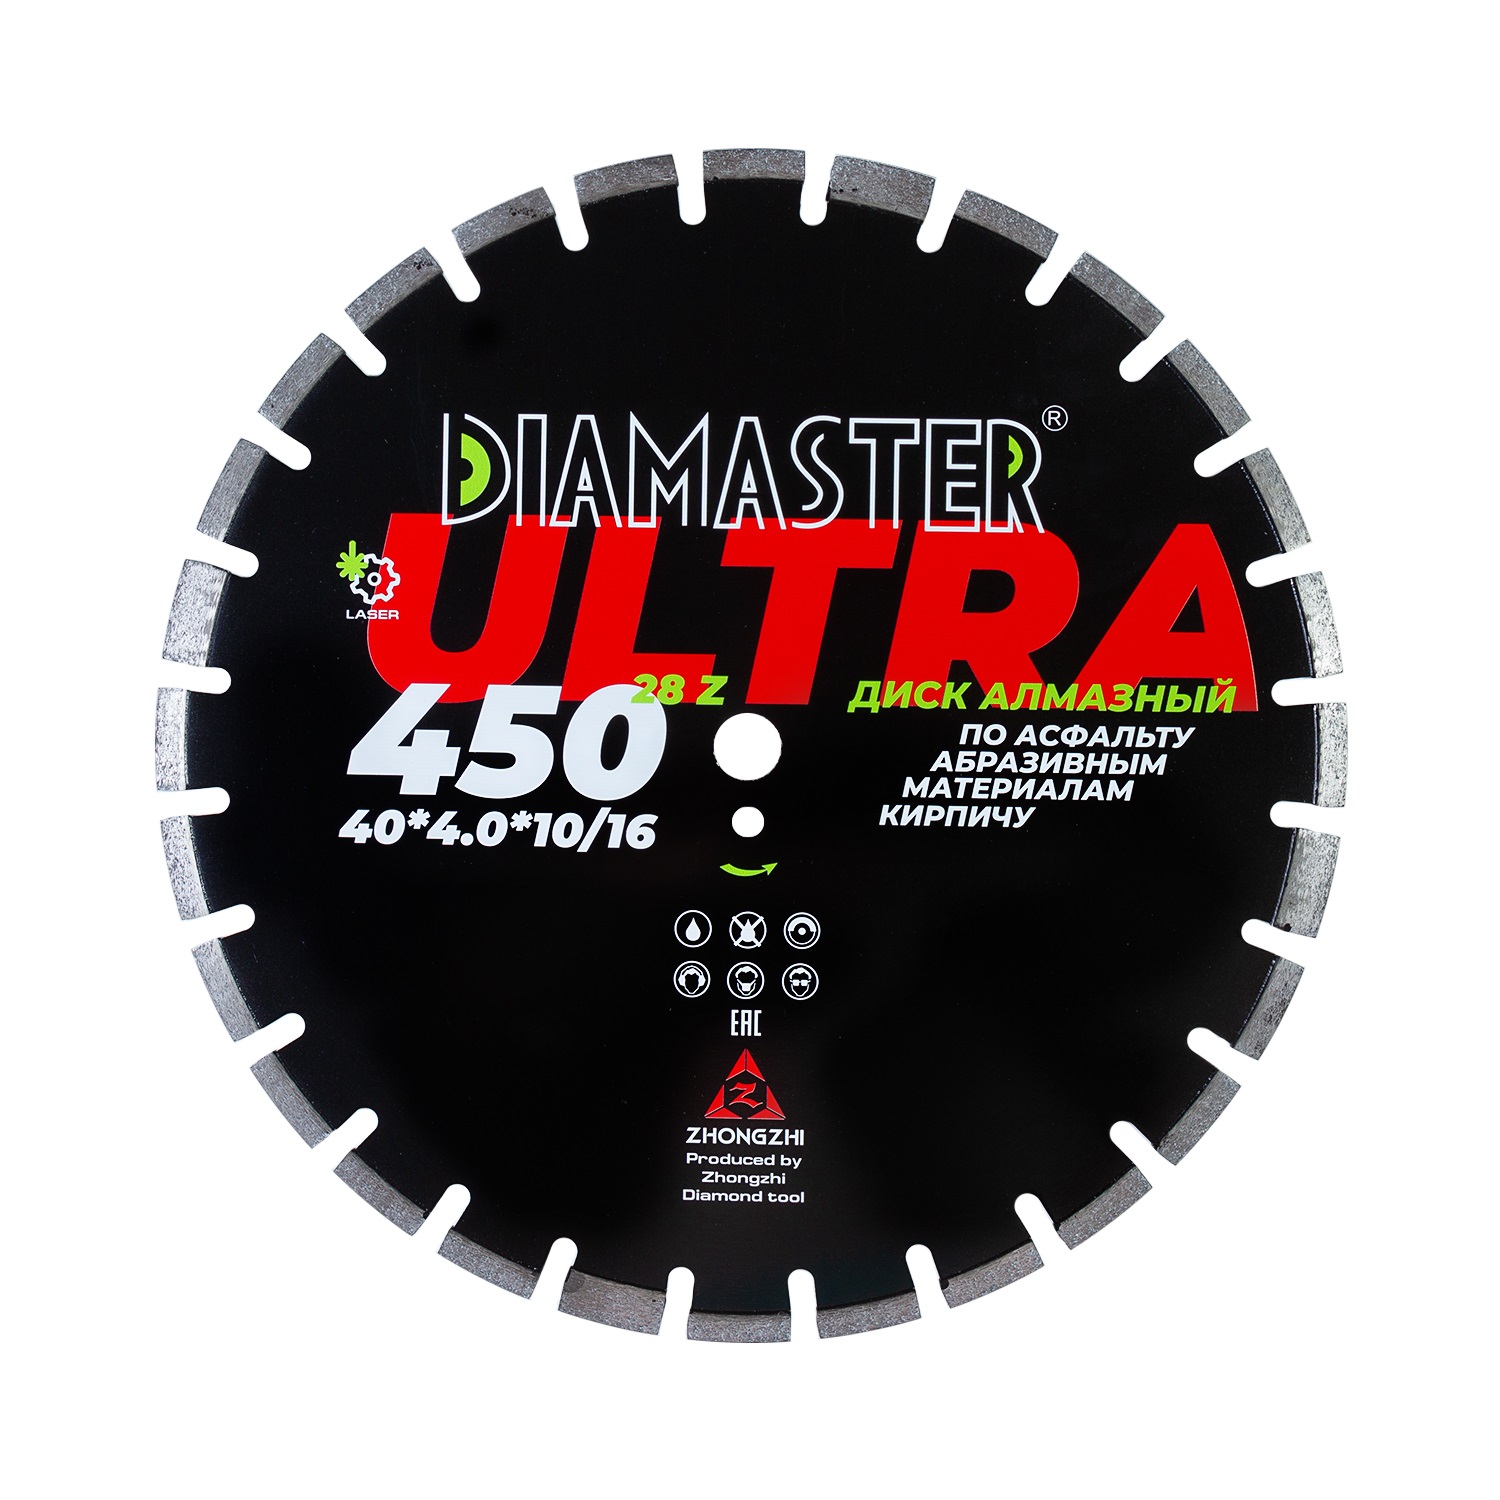 Диск сегментный Laser ULTRA д.450*2,8*25,4 (40*4,0*10/16)мм | 28 (24+4)z/асфальт/wet/dry DIAMASTER диск сегментный laser arix razor д 400 2 8 25 4 40 3 6 12 мм 24z железобетон wet dry diamaster